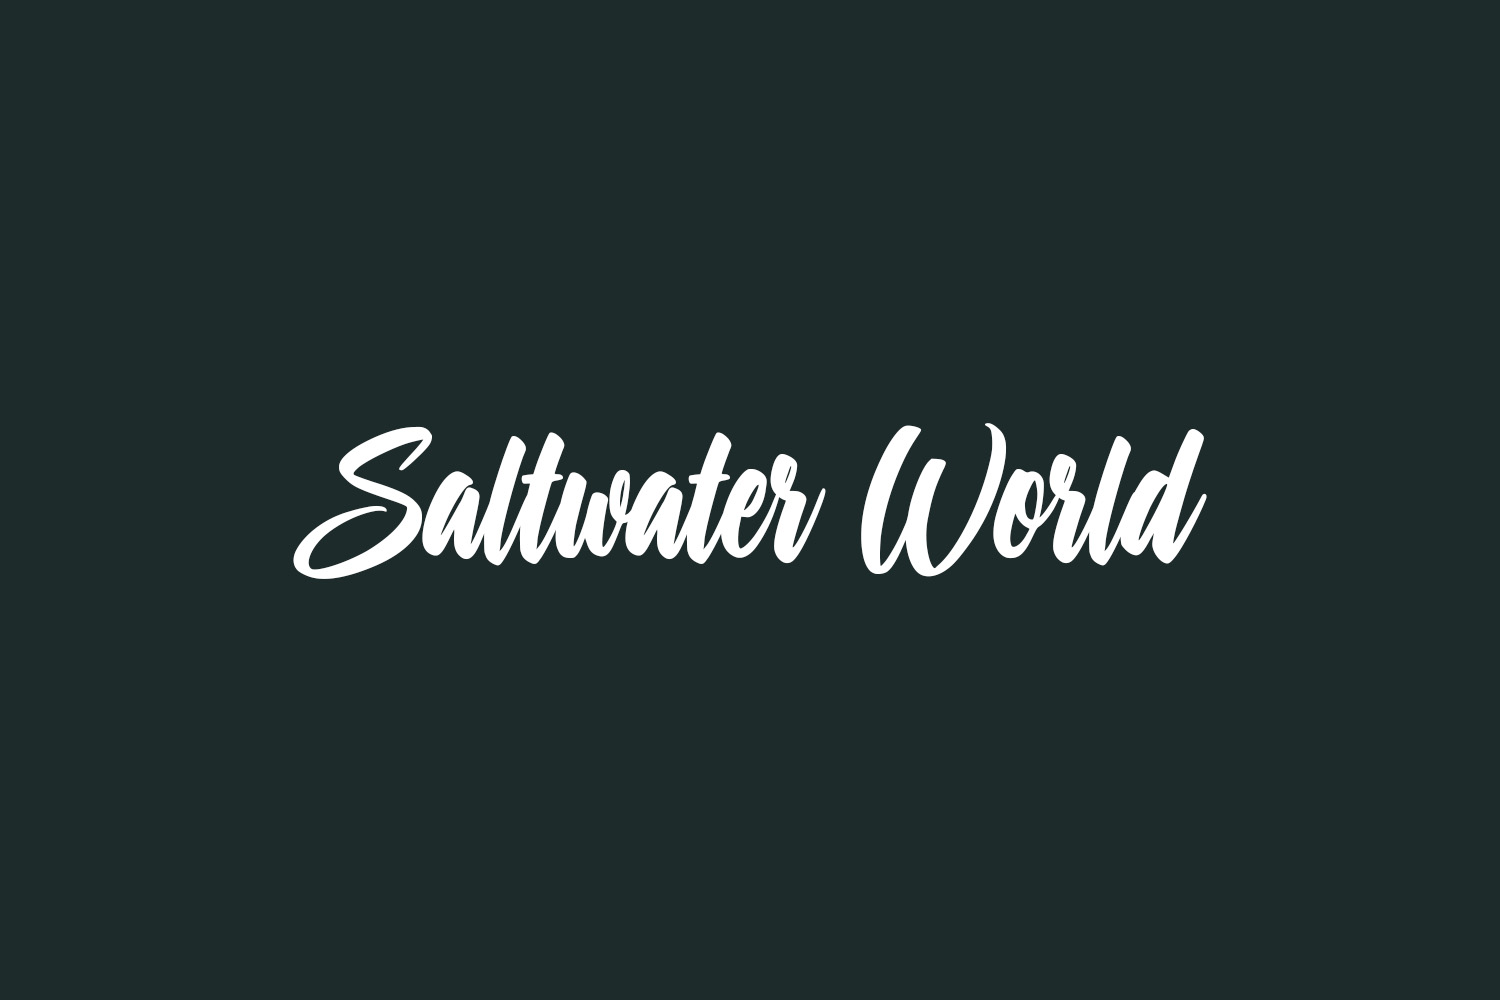 Saltwater World Free Font